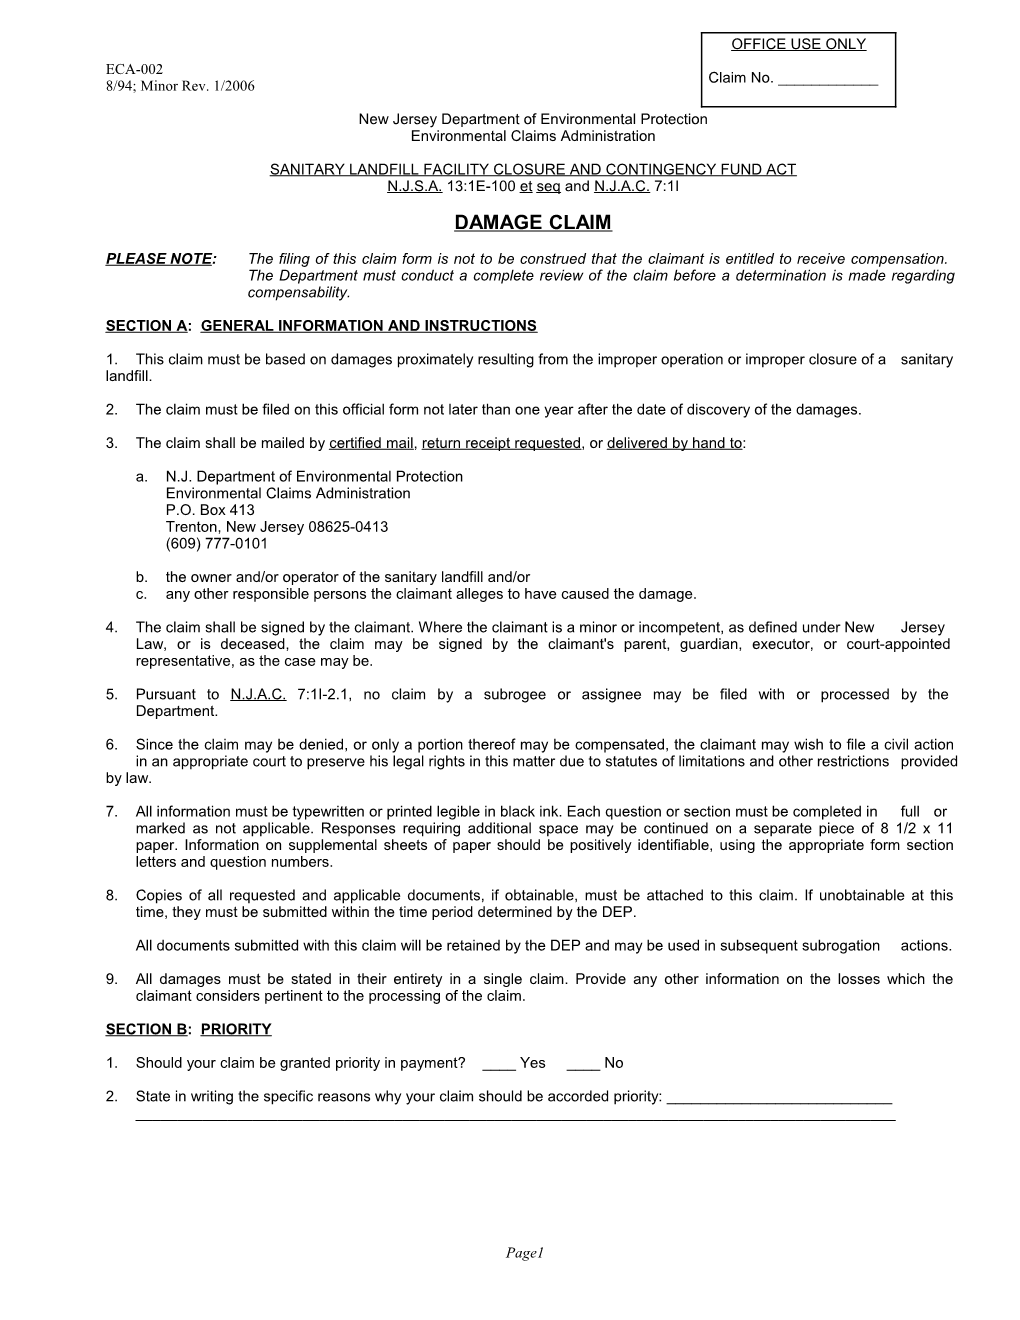 NJDEP Form ECA-002 (8/94; Minor Rev. 1/2006)